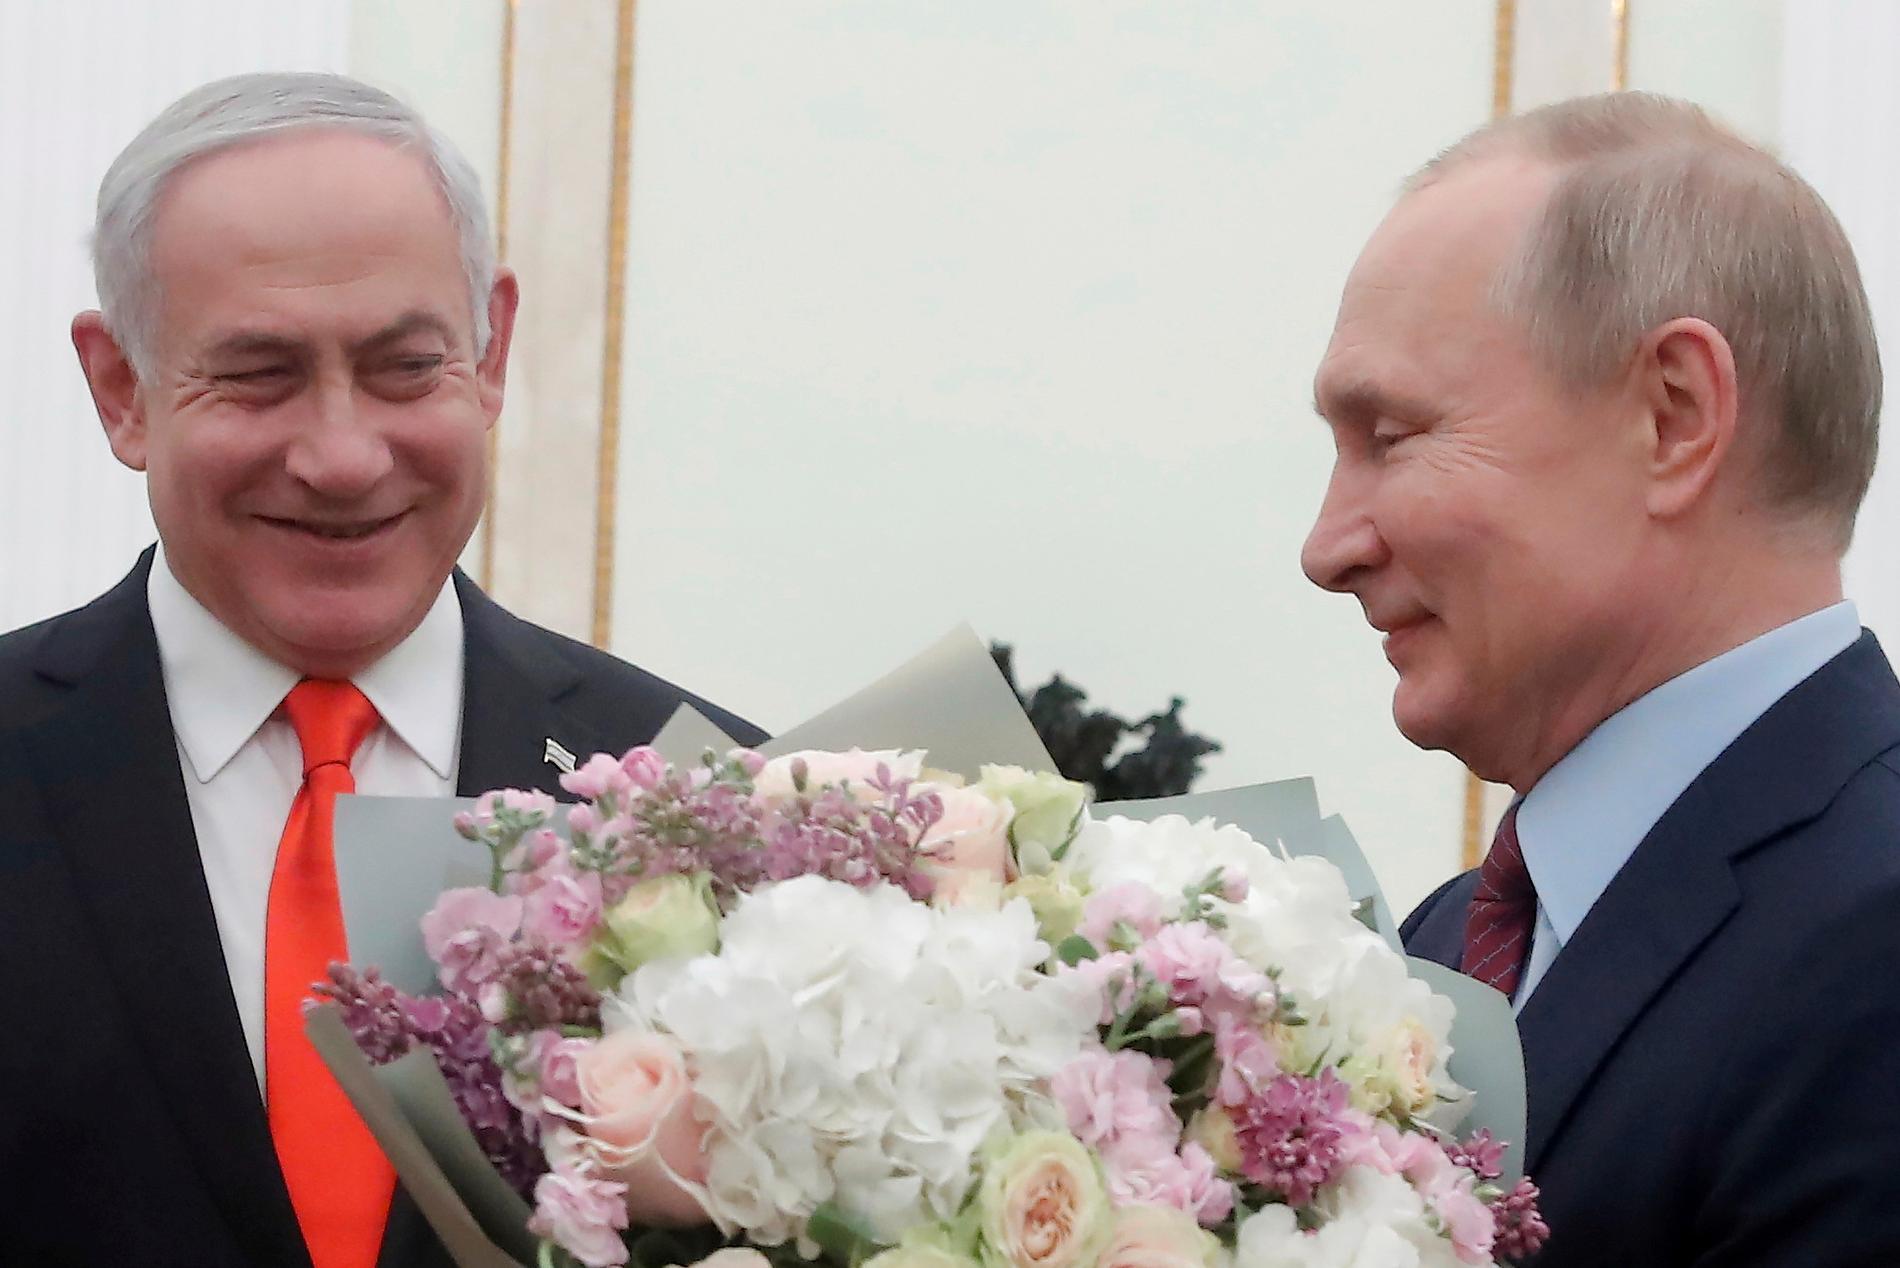 In better times: Vladimir Putin received Prime Minister Benjamin Netanyahu at the Kremlin on January 30, 2020. Netanyahu has referred to Putin as a friend.